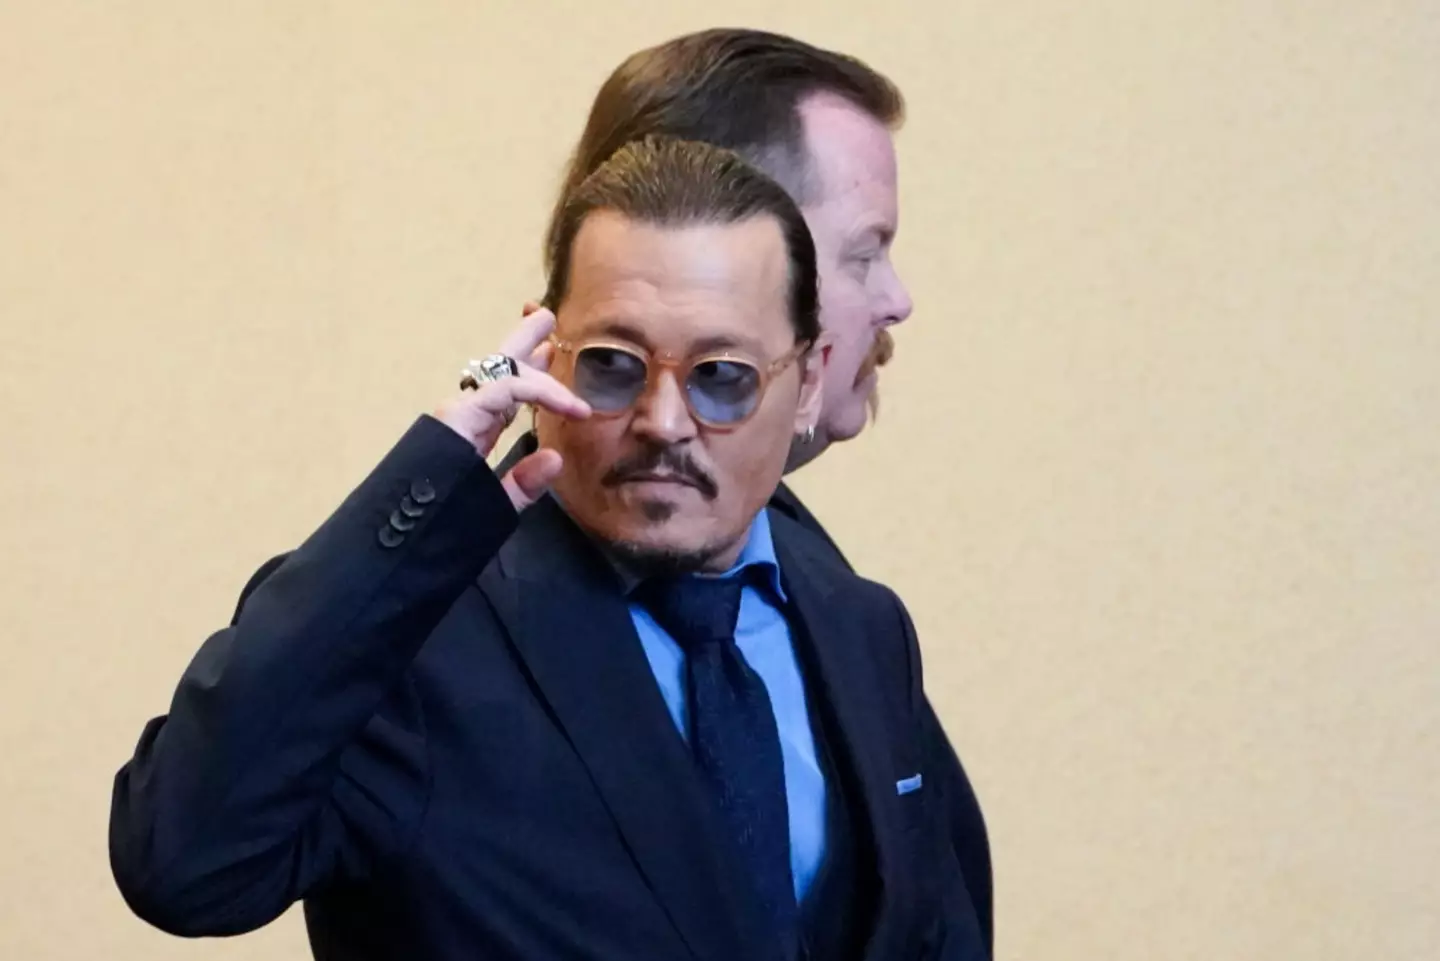 Depp won the 2022 defamation trial. (EVELYN HOCKSTEIN/POOL/AFP via Getty Images)